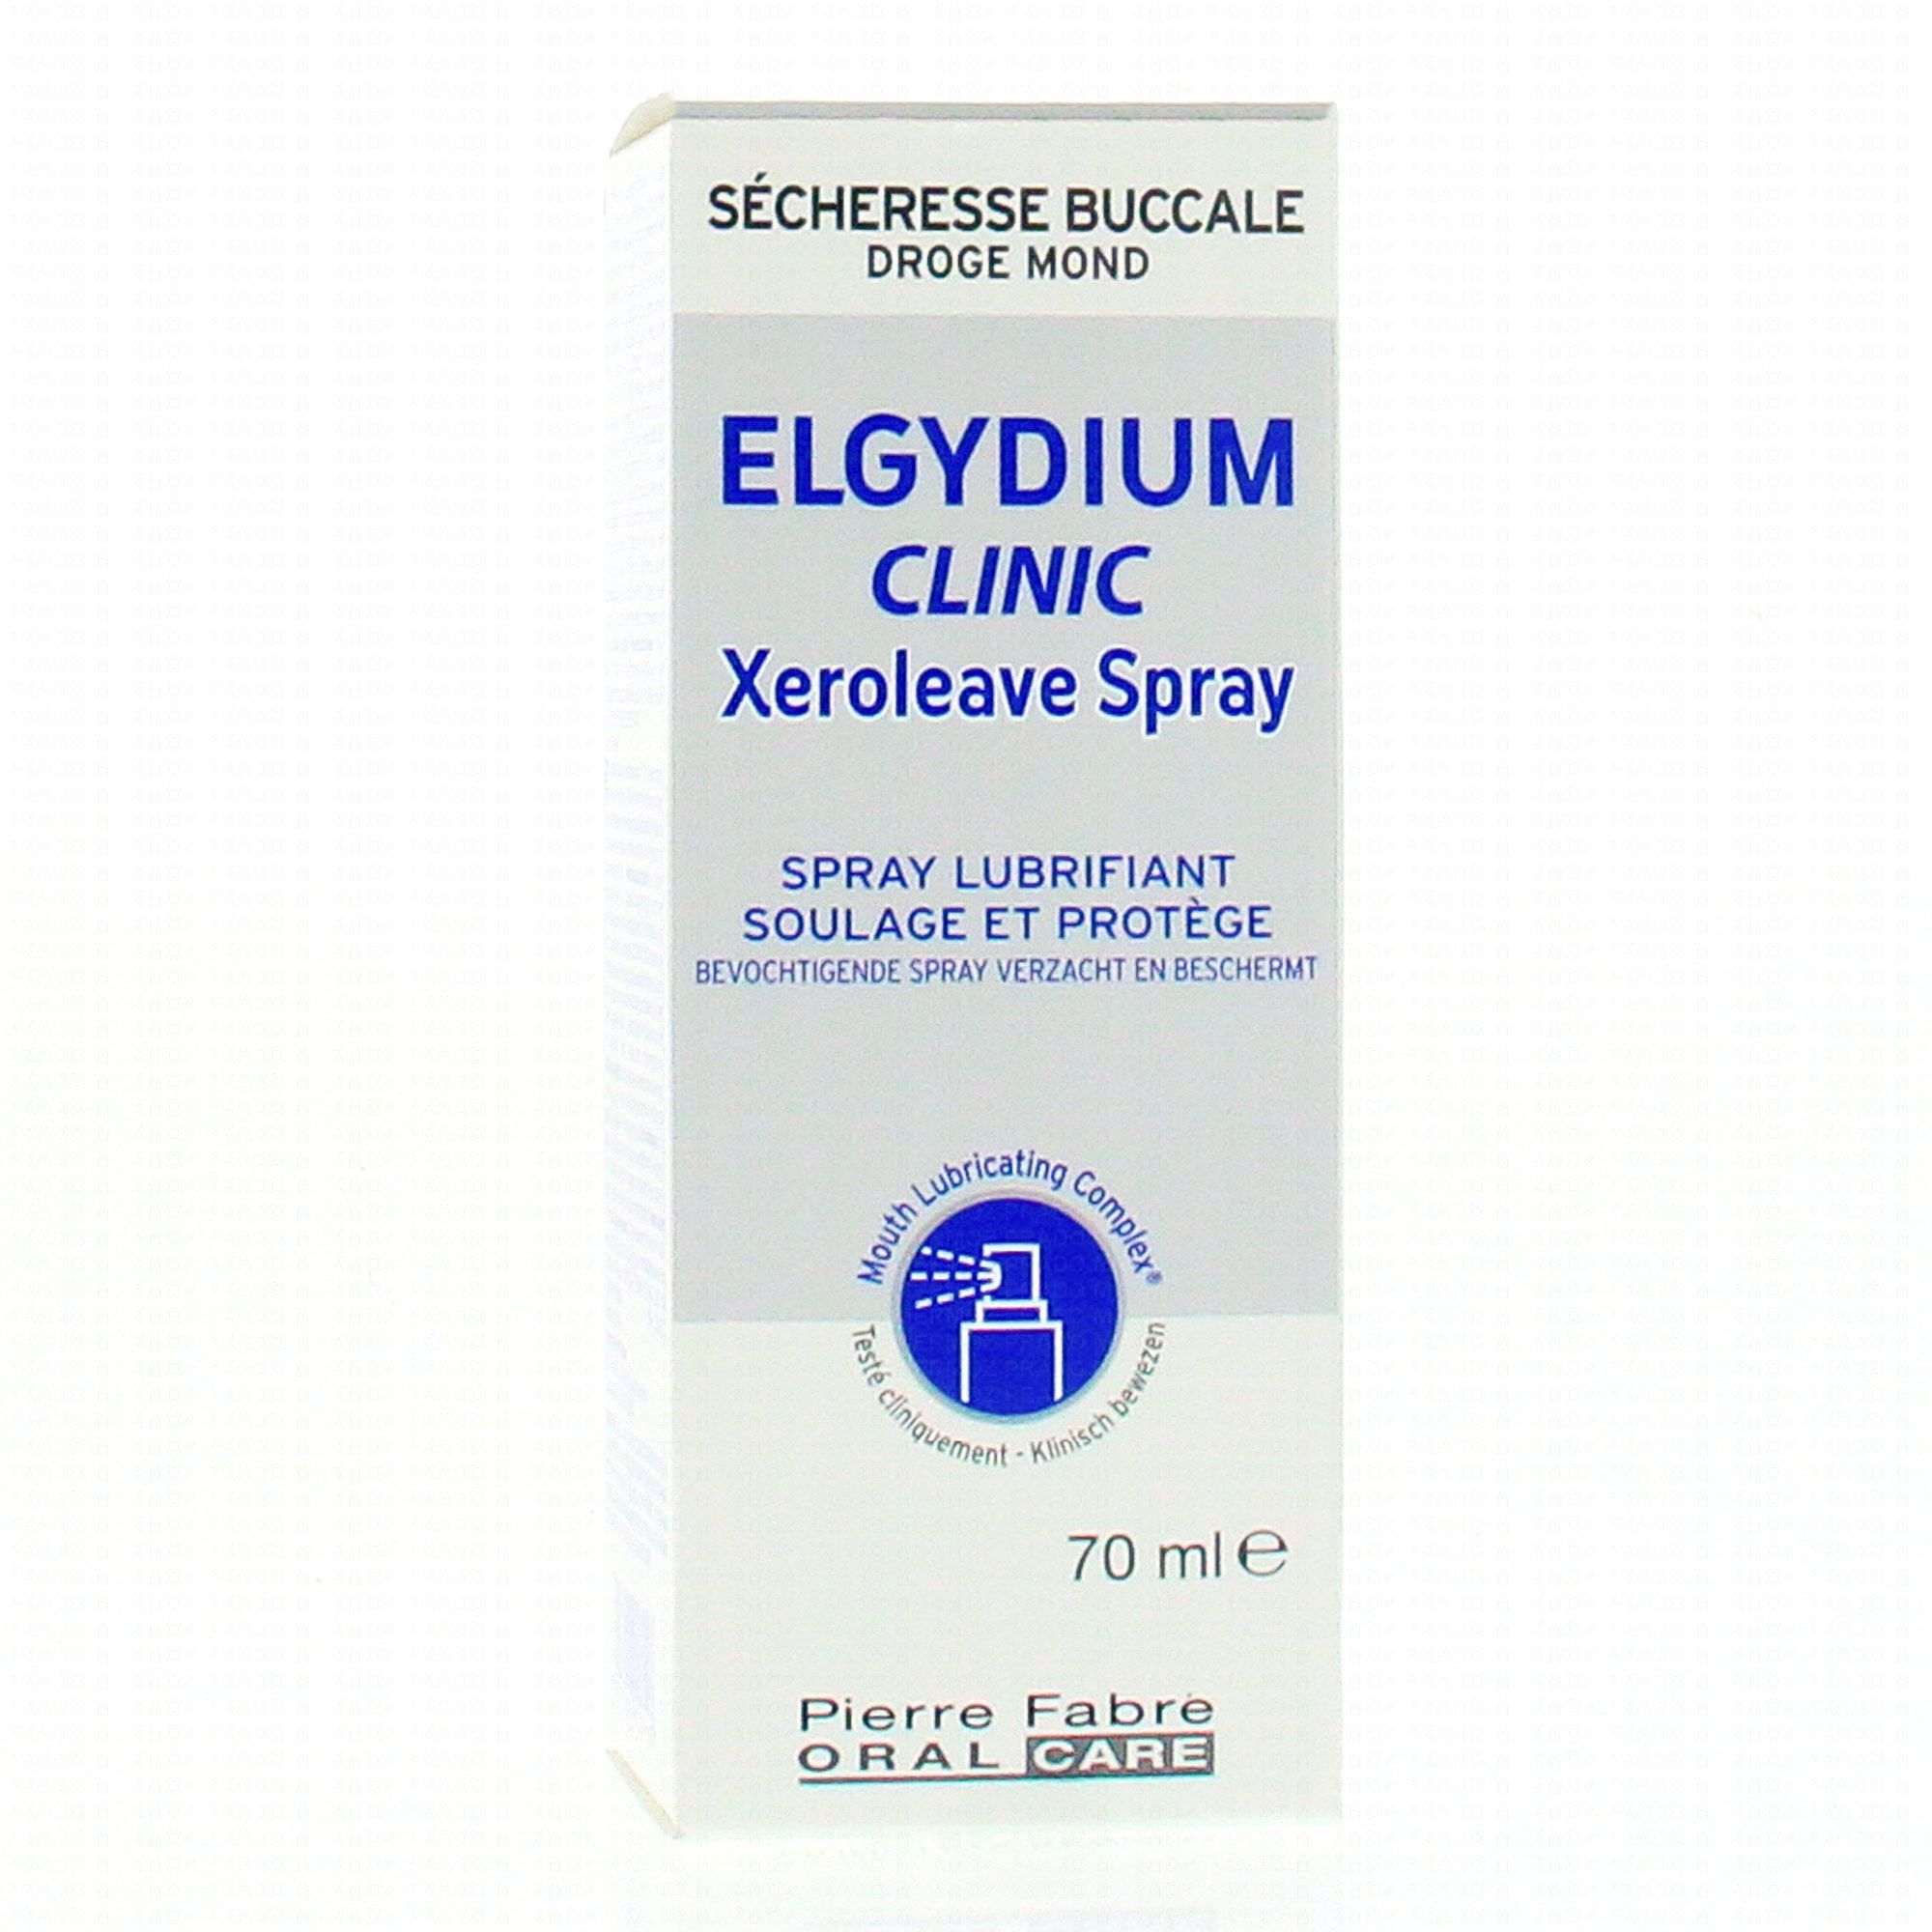 ELGYDIUM Clinic bouche sèche flacon spray 70ml - Parapharmacie ...